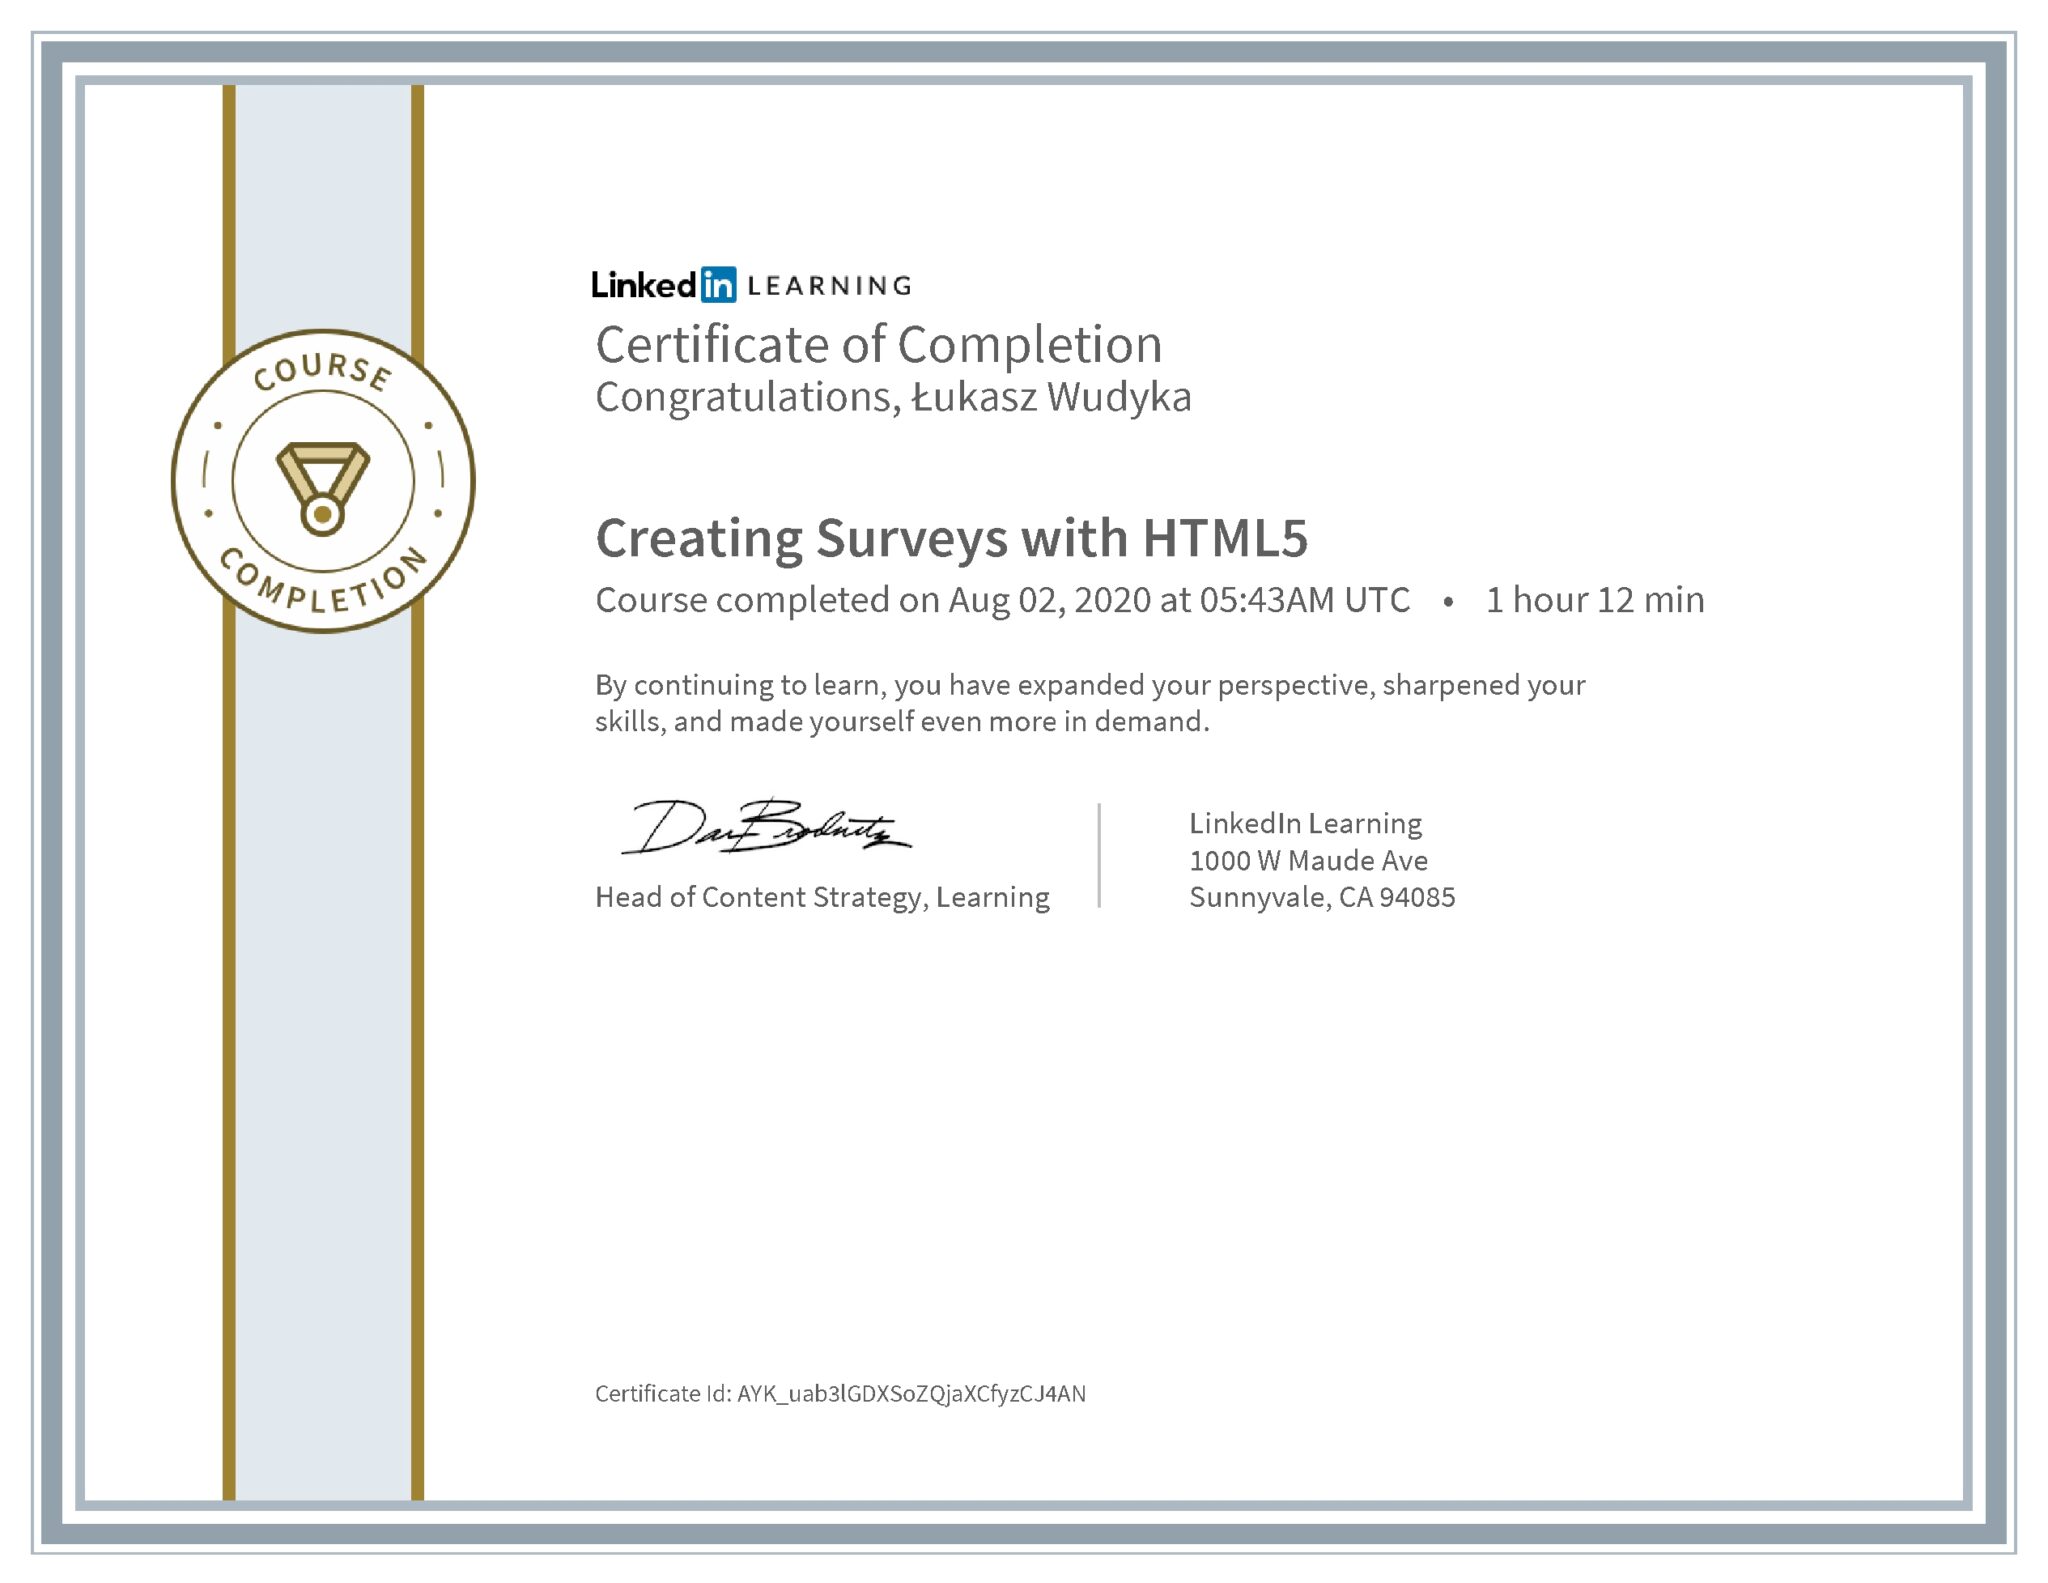 Łukasz Wudyka certyfikat LinkedIn Creating Surveys with HTML5